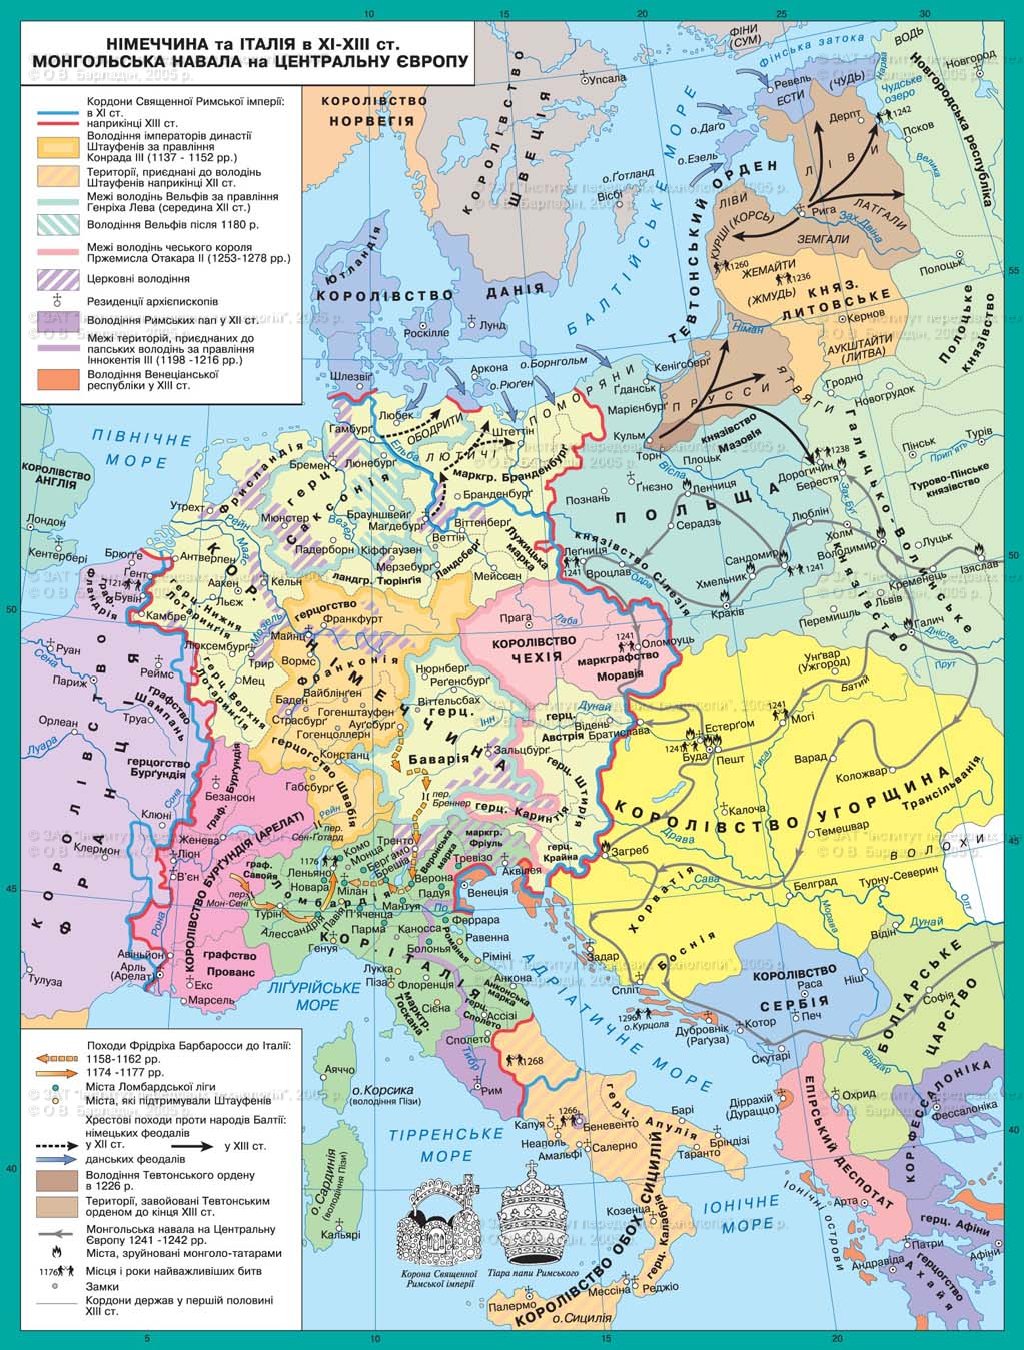 Европа 11 12 века. Карта Европы XII века. Карта Европы 13 века. Карта Европы 12-13 веков. Карта Европы XIII века.